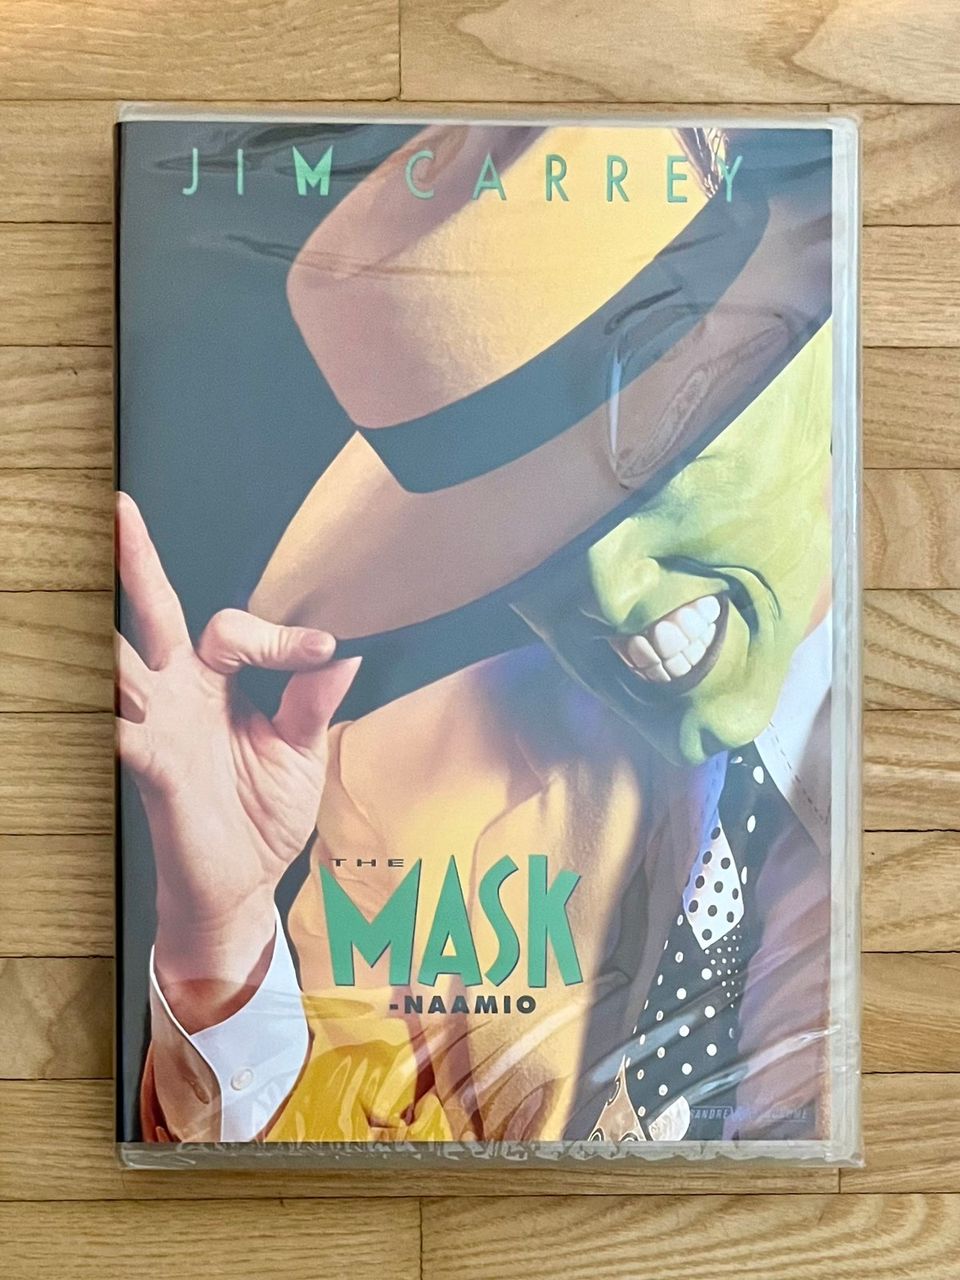 Mask DVD avaamaton